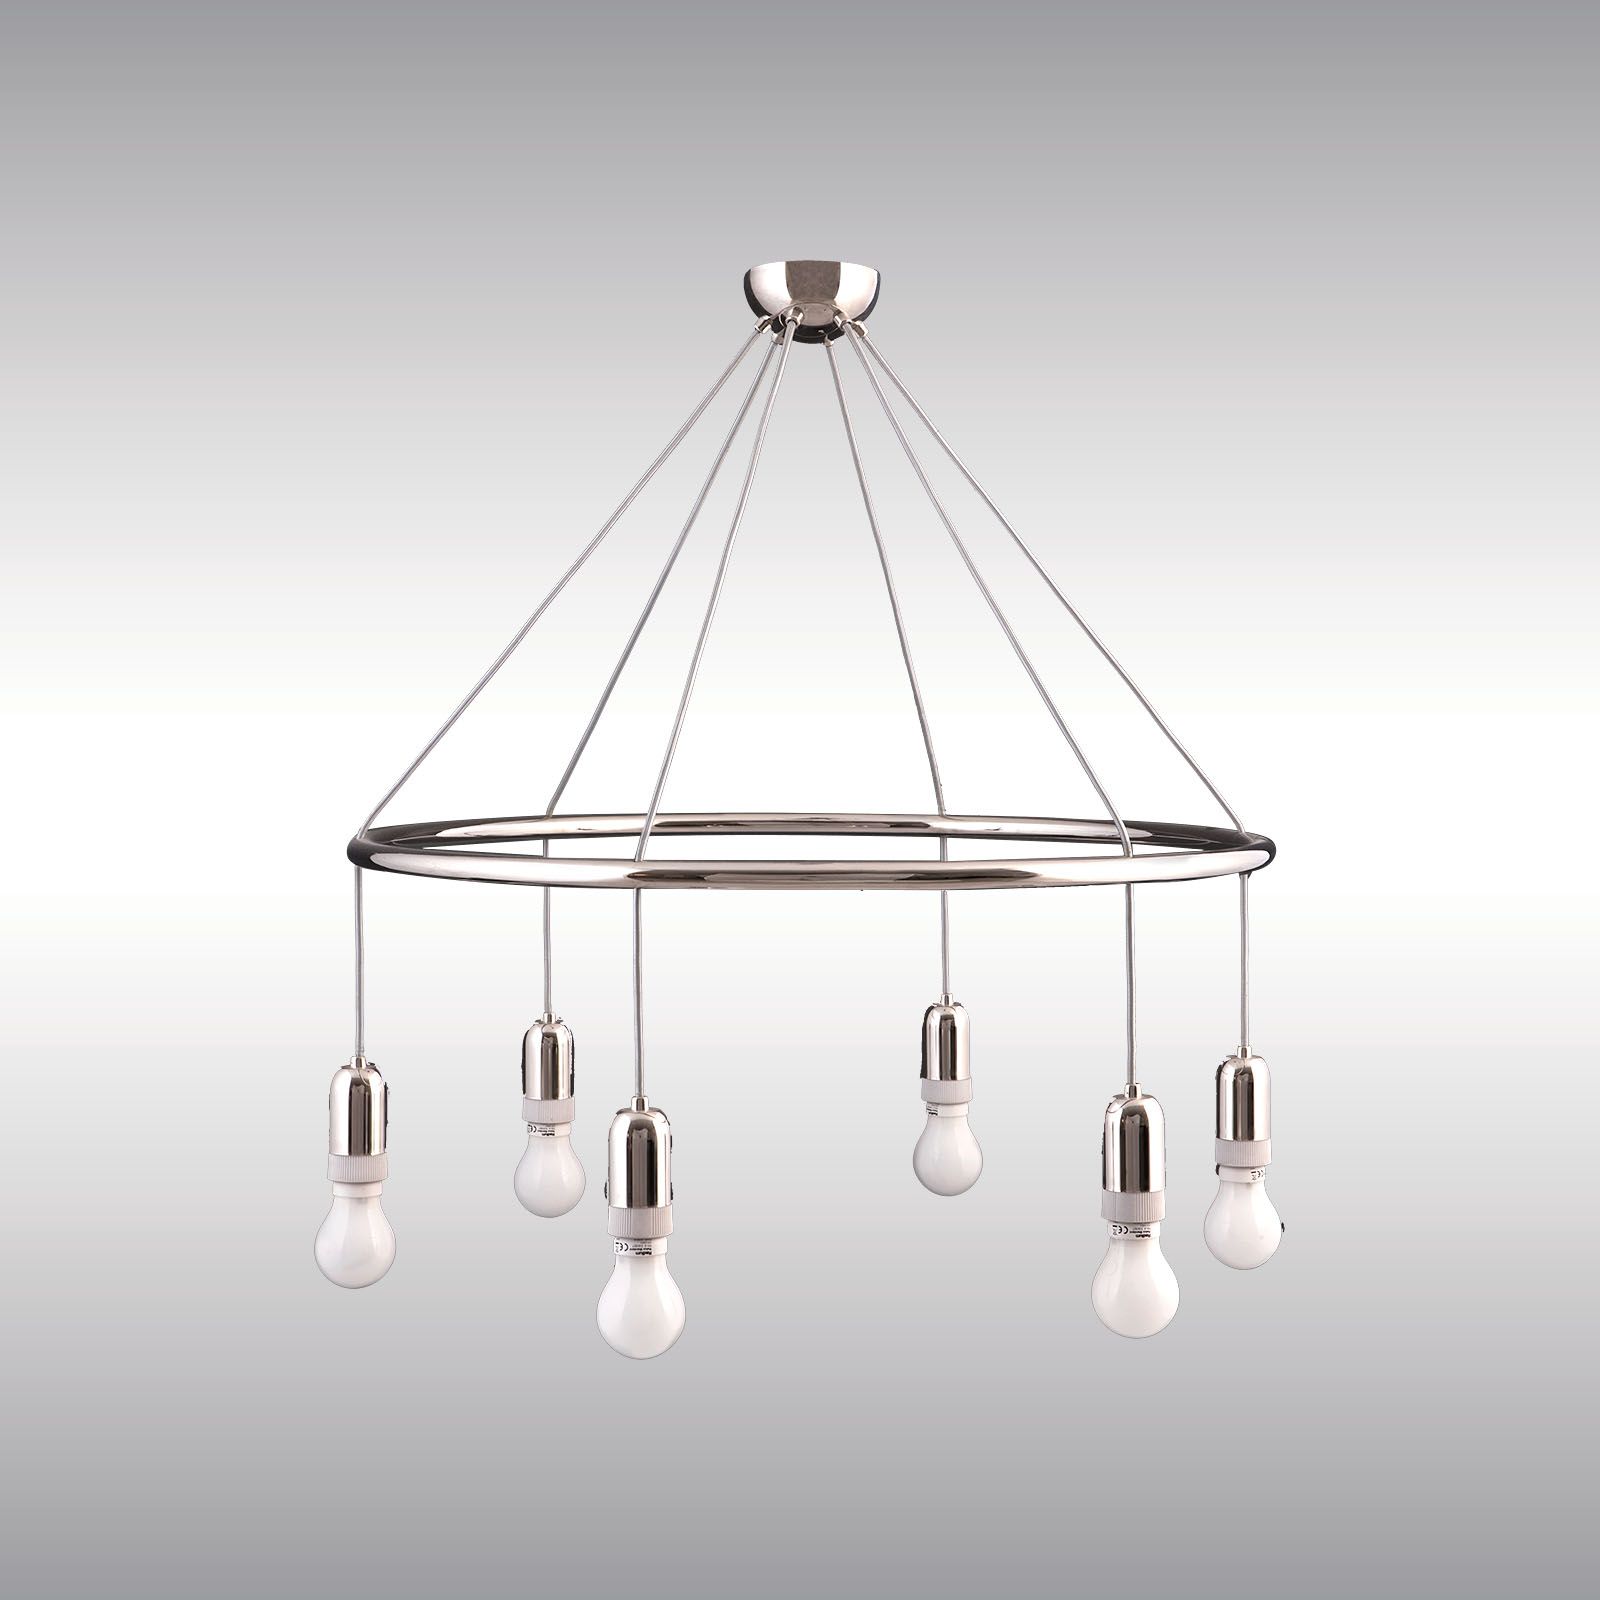 WOKA LAMPS VIENNA - OrderNr.: 20501|Goldman Hula Hoop - Design: Adolf Loos